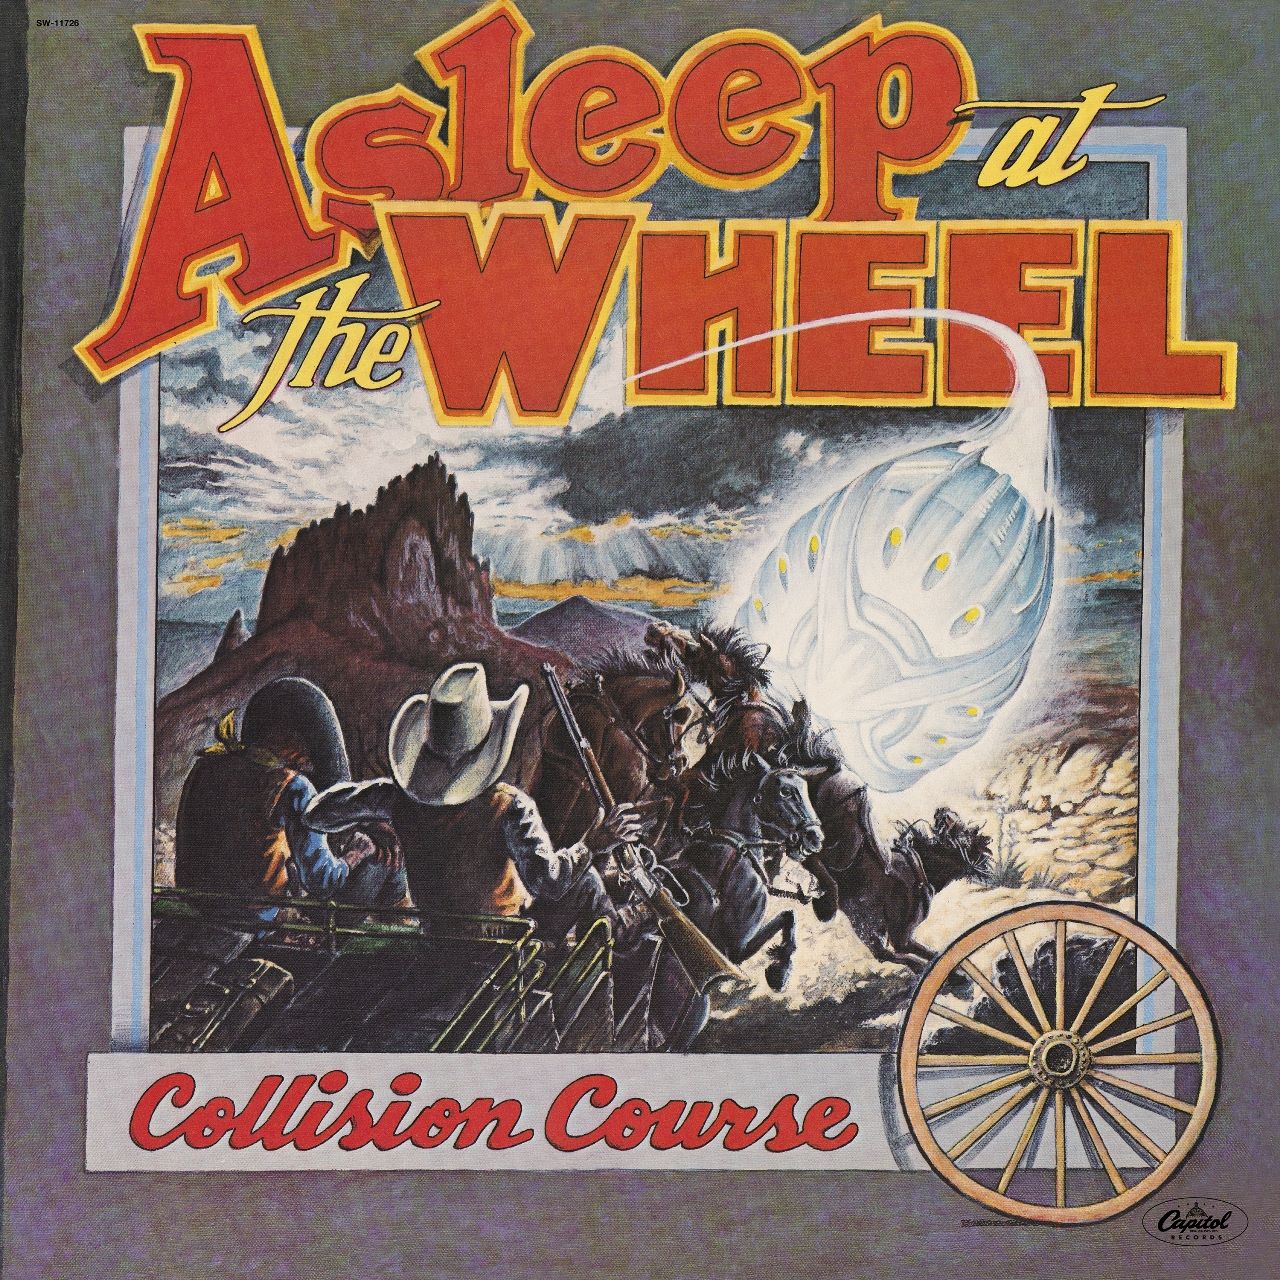 Asleep At The Wheel – Collision Course cover album